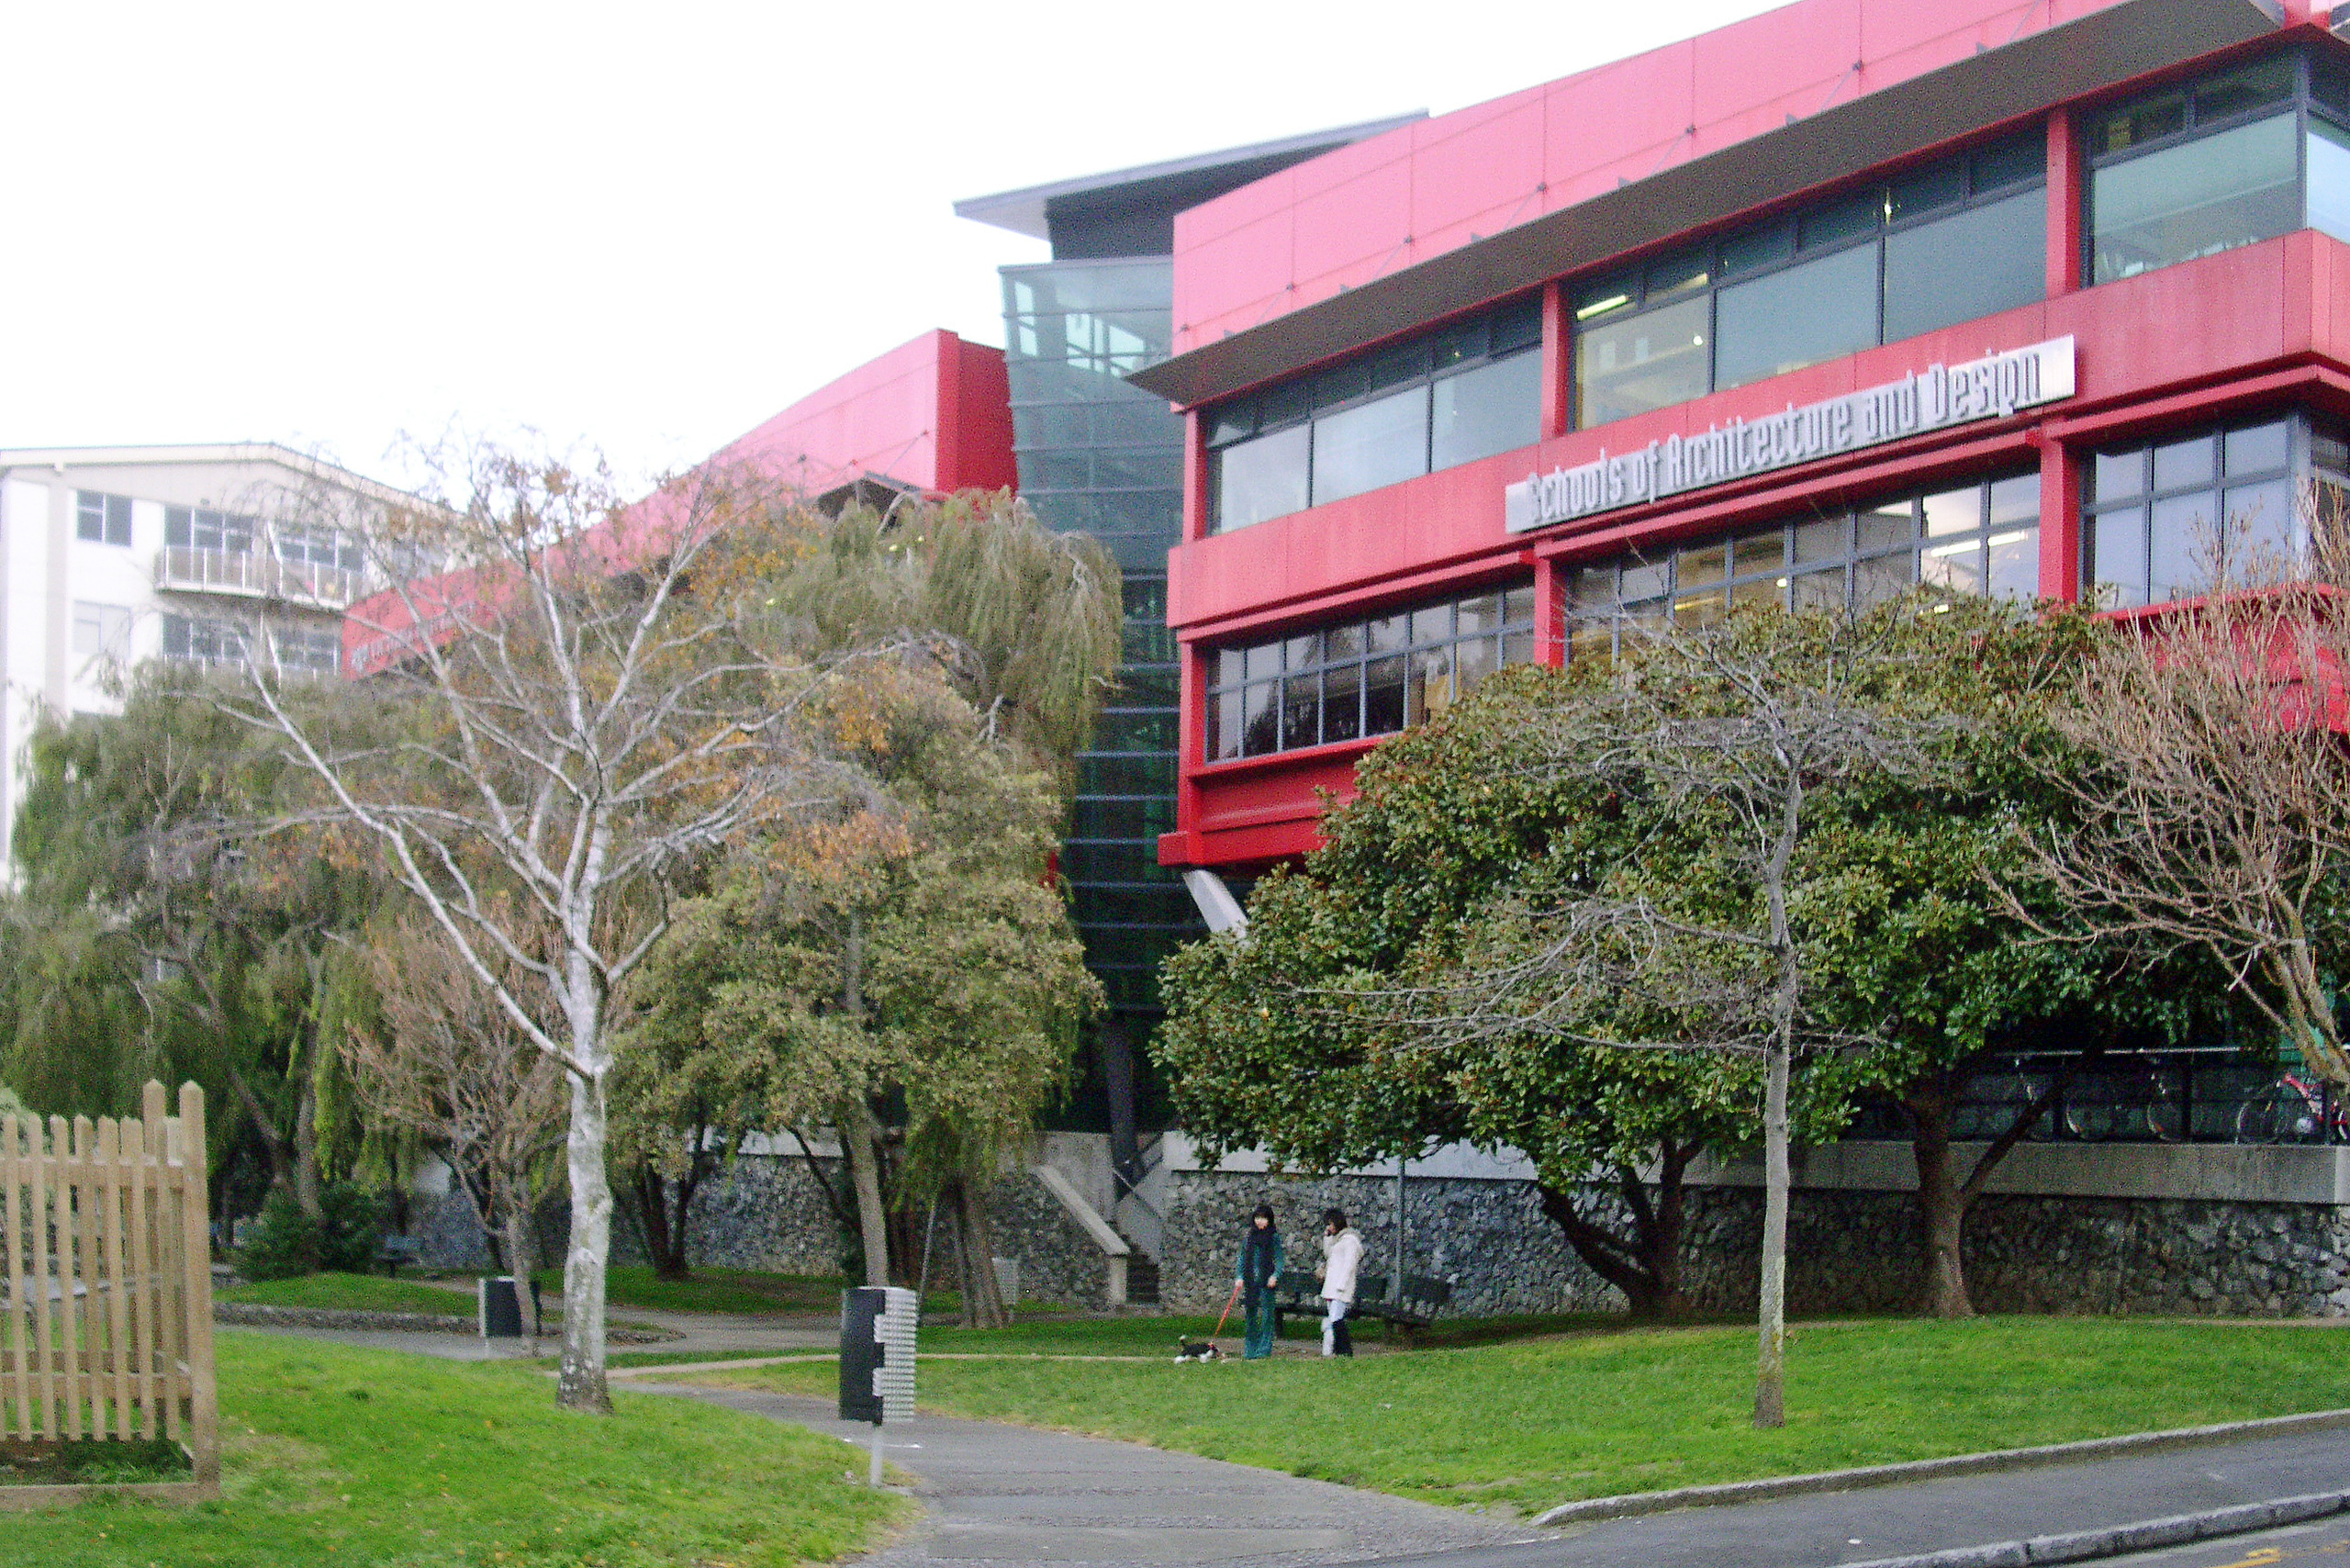 Victoria University – School of Architecture and Design